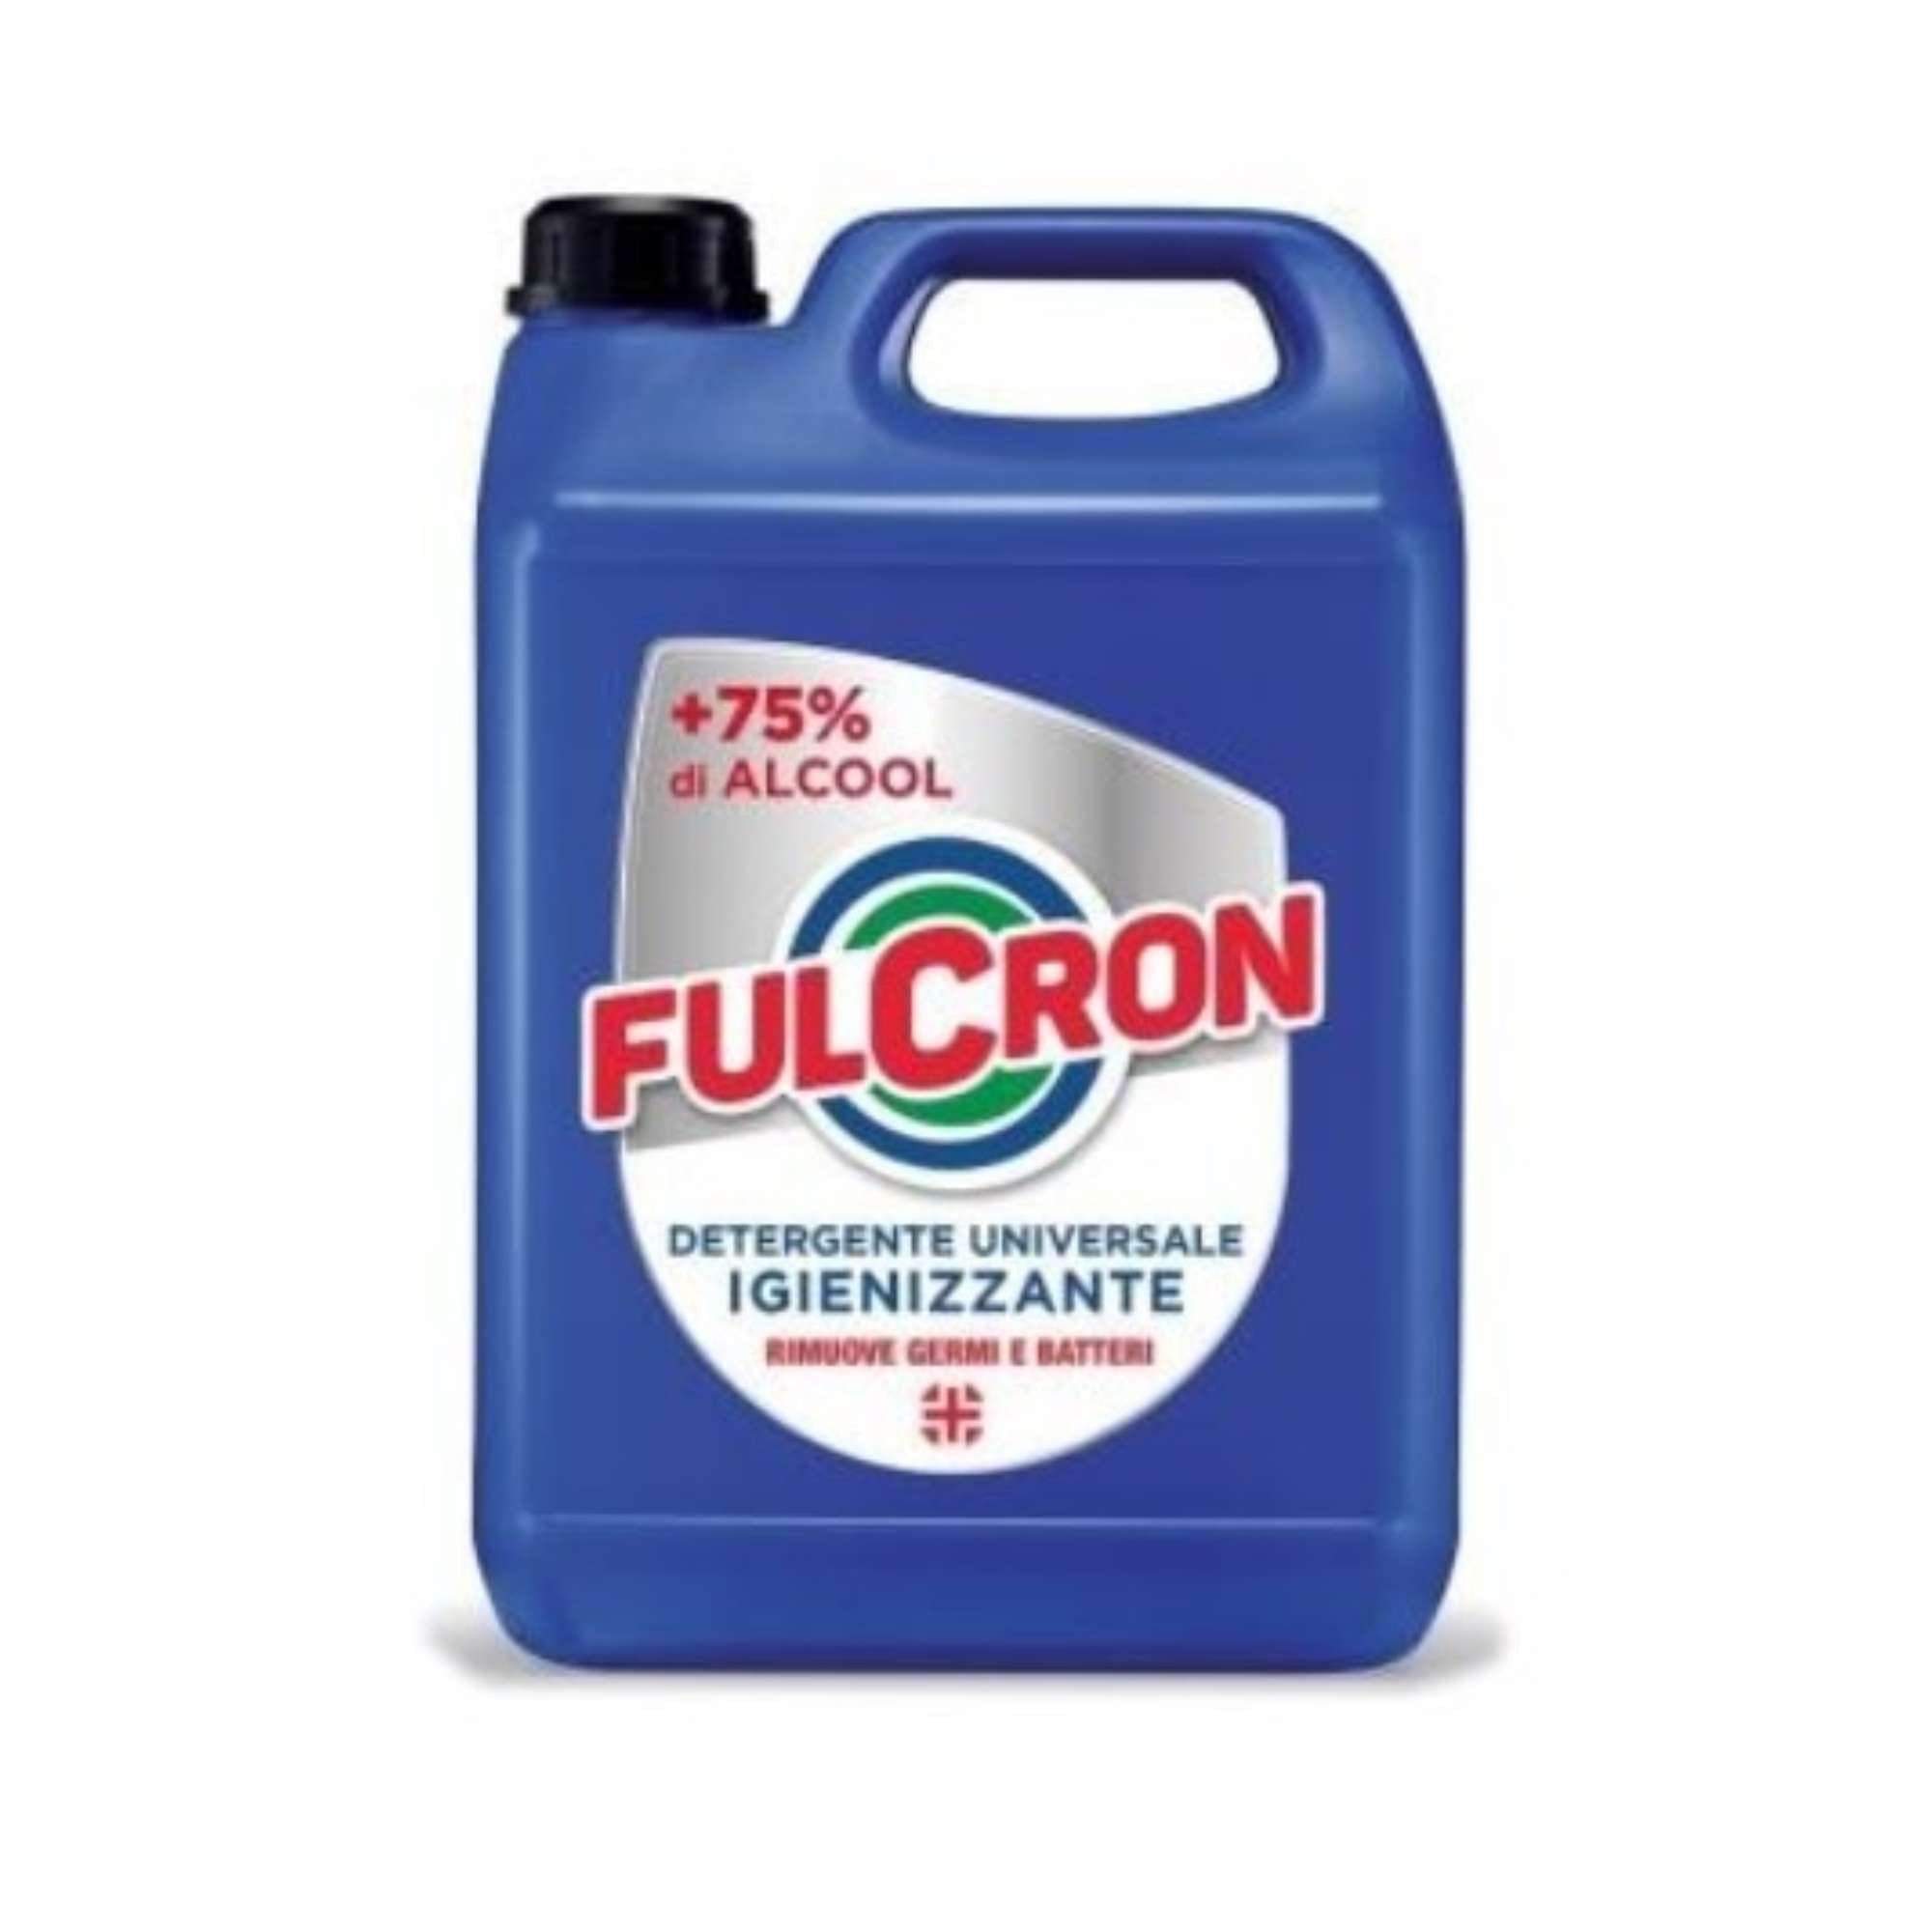 Fulcron universal sanitizing cleaner 5 liters - Arexons 2026